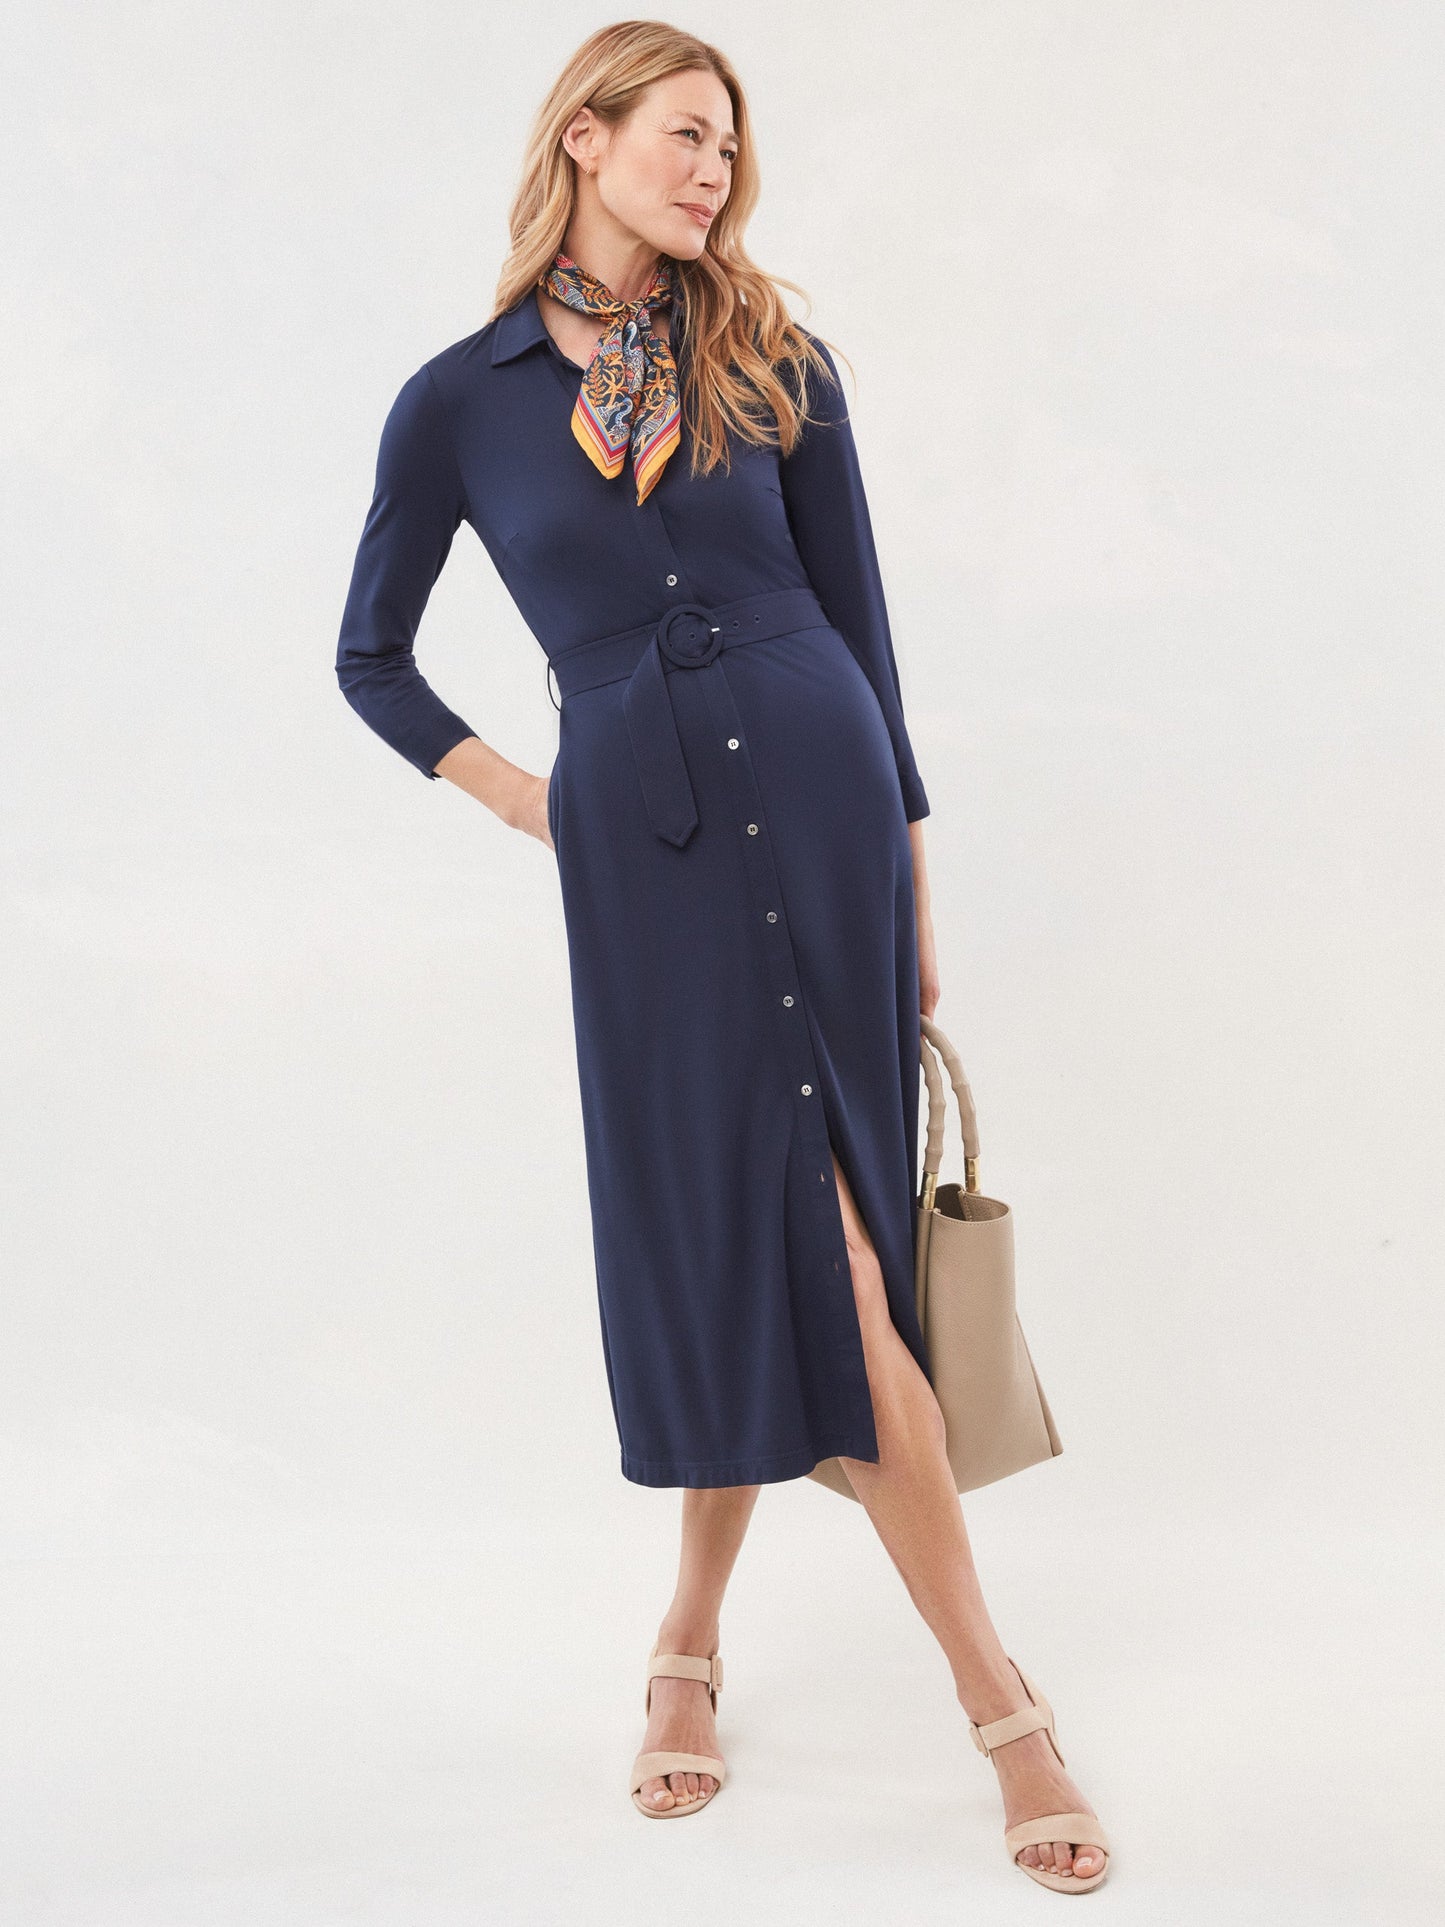 Model wears J.McLaughlin Pamela dress in deep navy made with rayon/nylon/spandex.